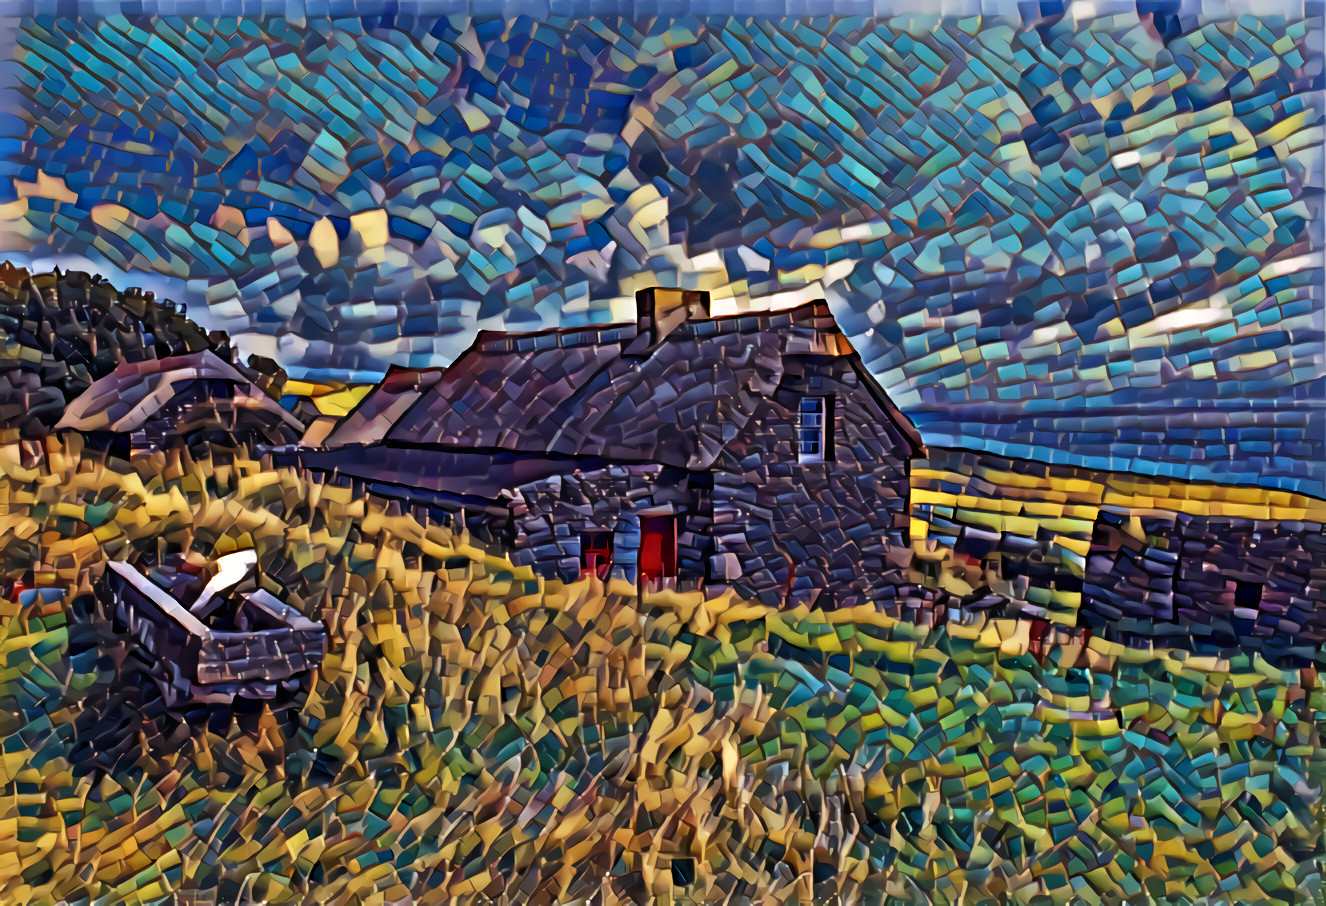 Irish Cottage by the Sea : Image by wagrati_photo / Pixabay